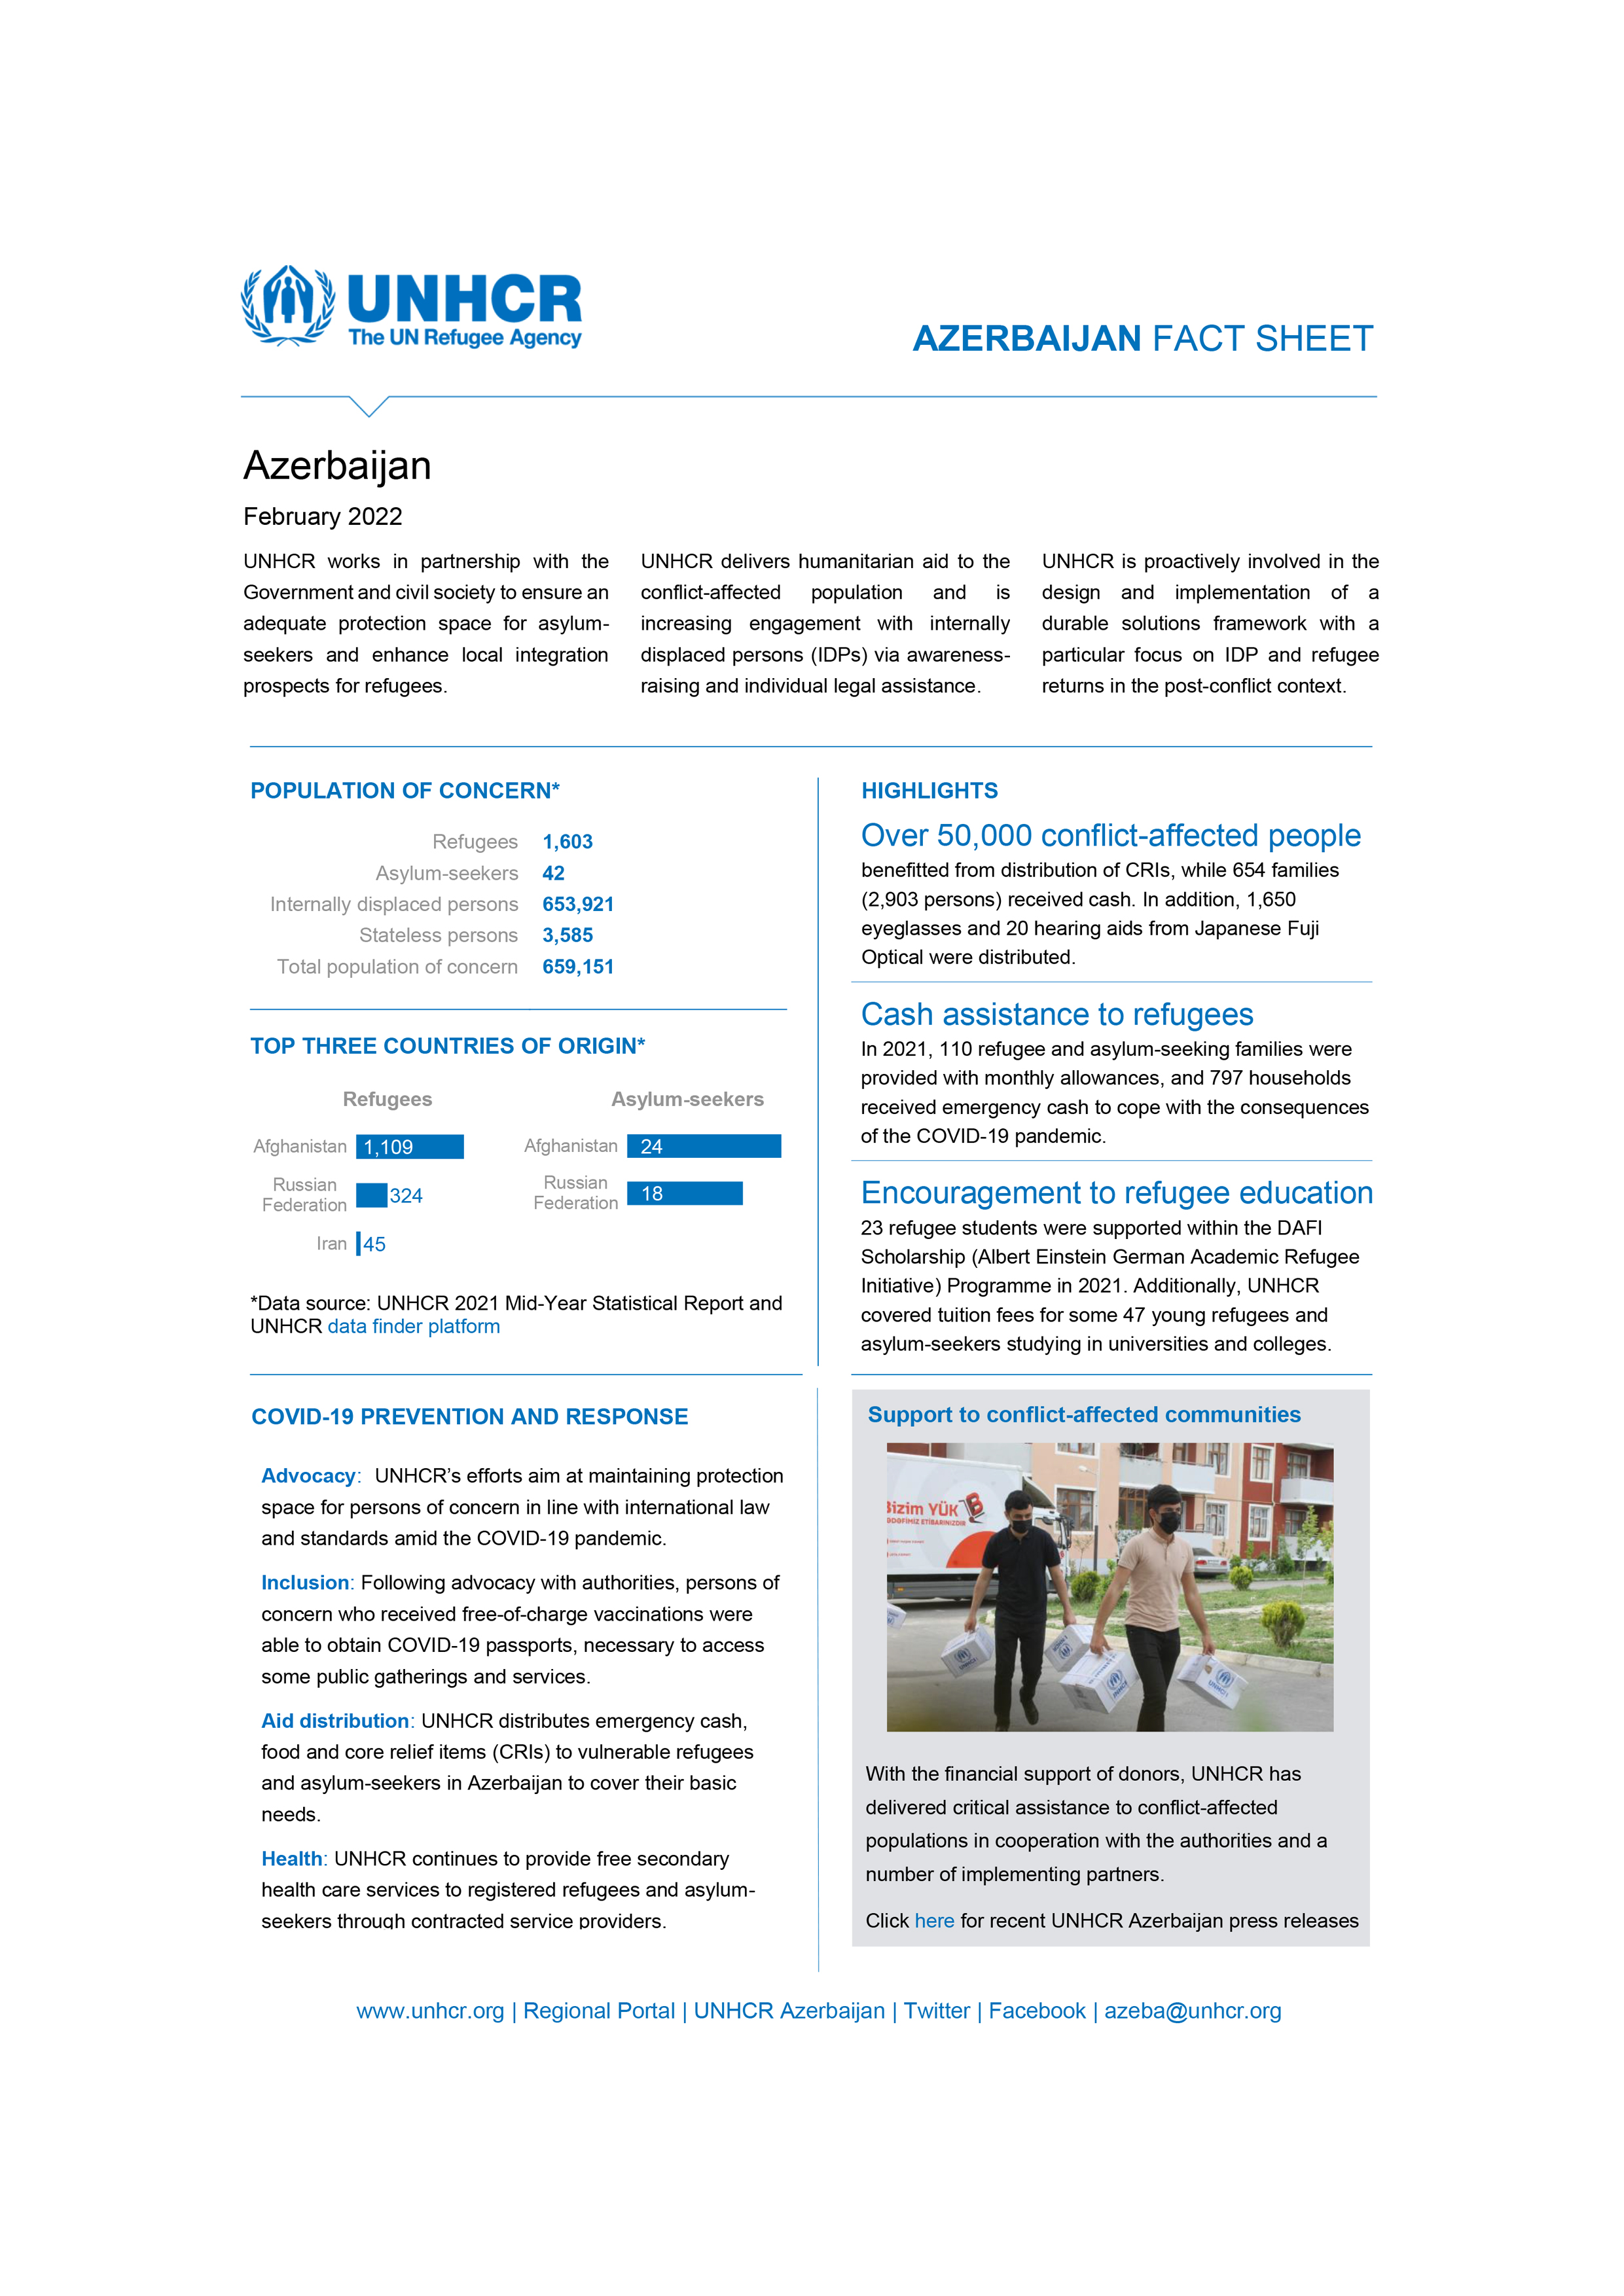 Factsheet of the UN Refugee Agency in Azerbaijan